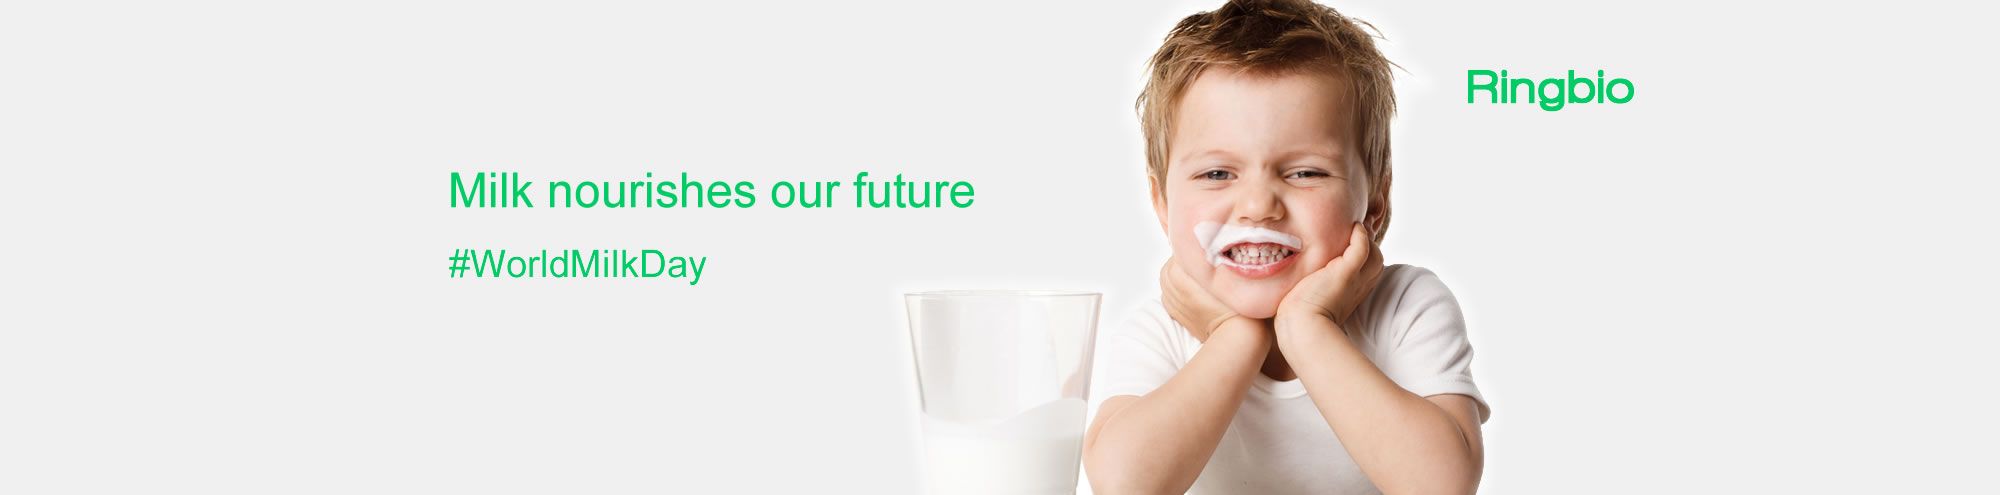 World milk day, keep milk safe to nourish our future